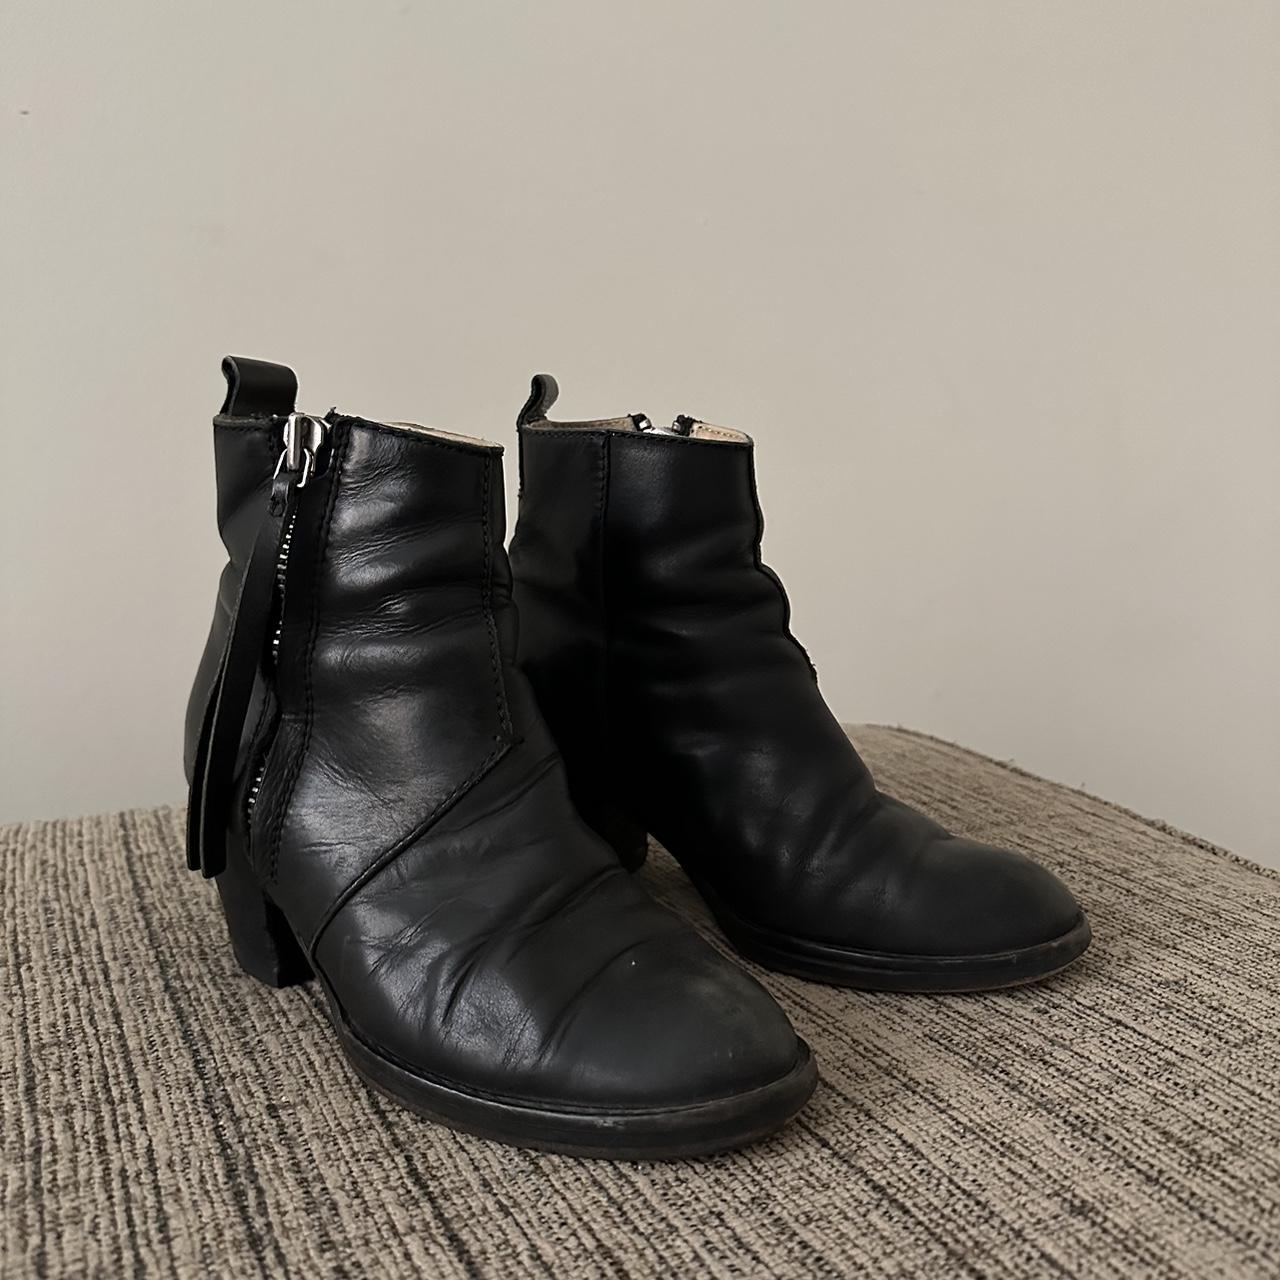 Acne Studios Pistol Boots, Black leather. Size zips...